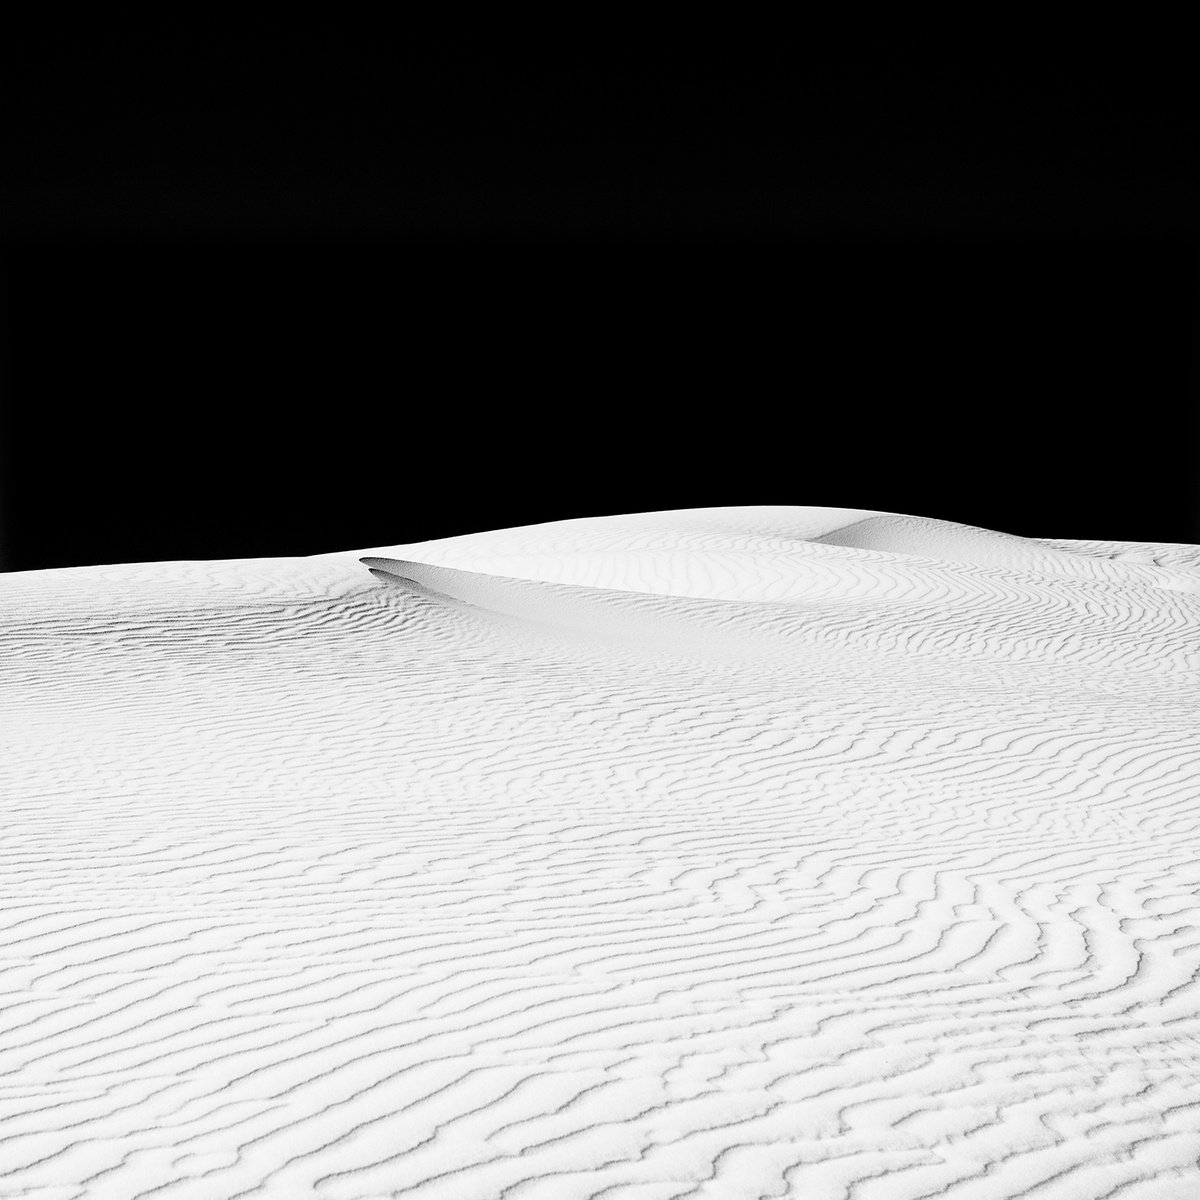 Desert Dune, NM by Heike Bohnstengel